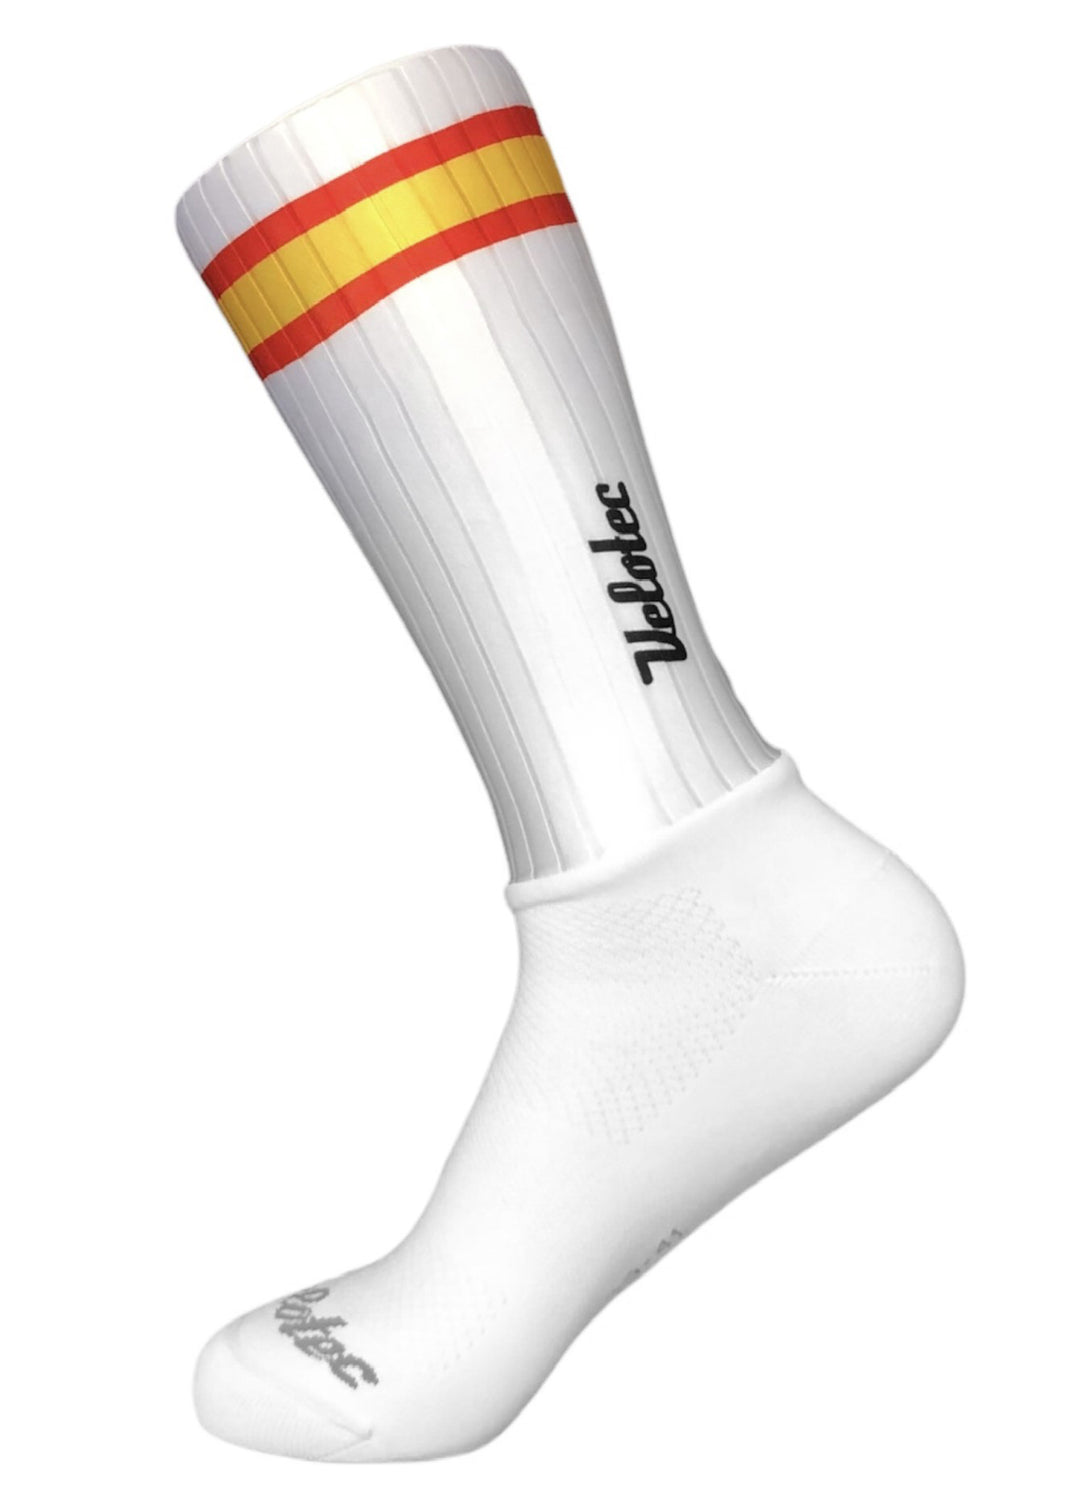 Aero-socks 2.0 Espagne